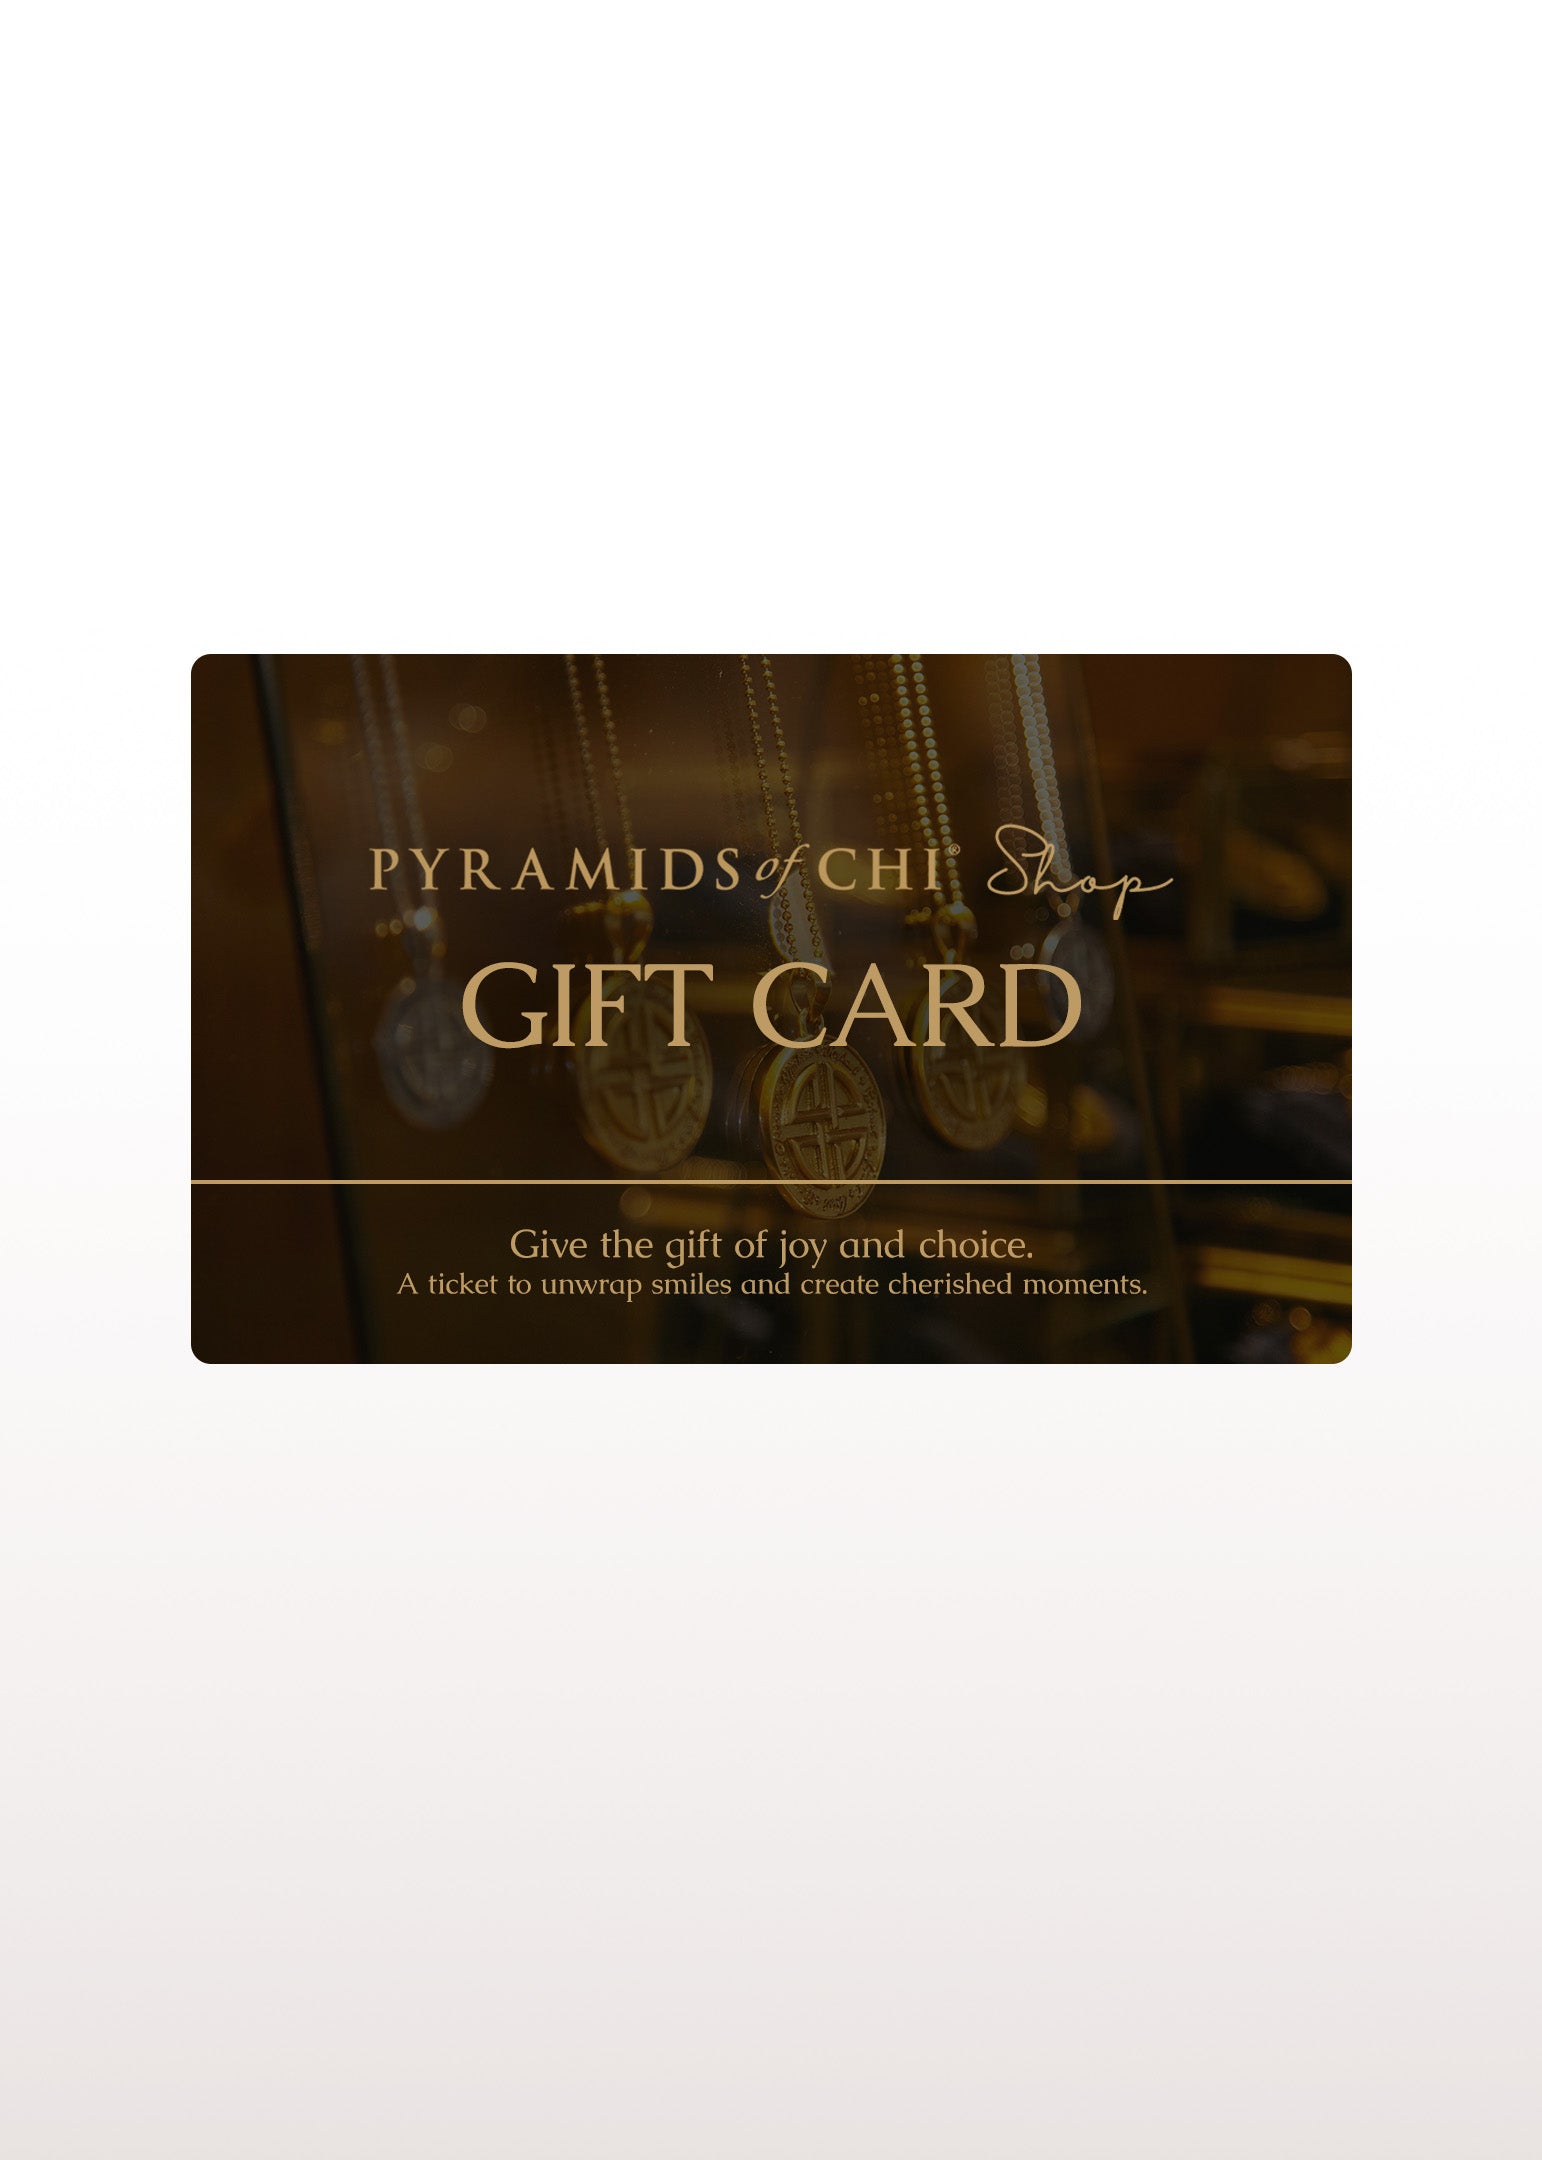 Pyramids of Chi Shop Gift Card